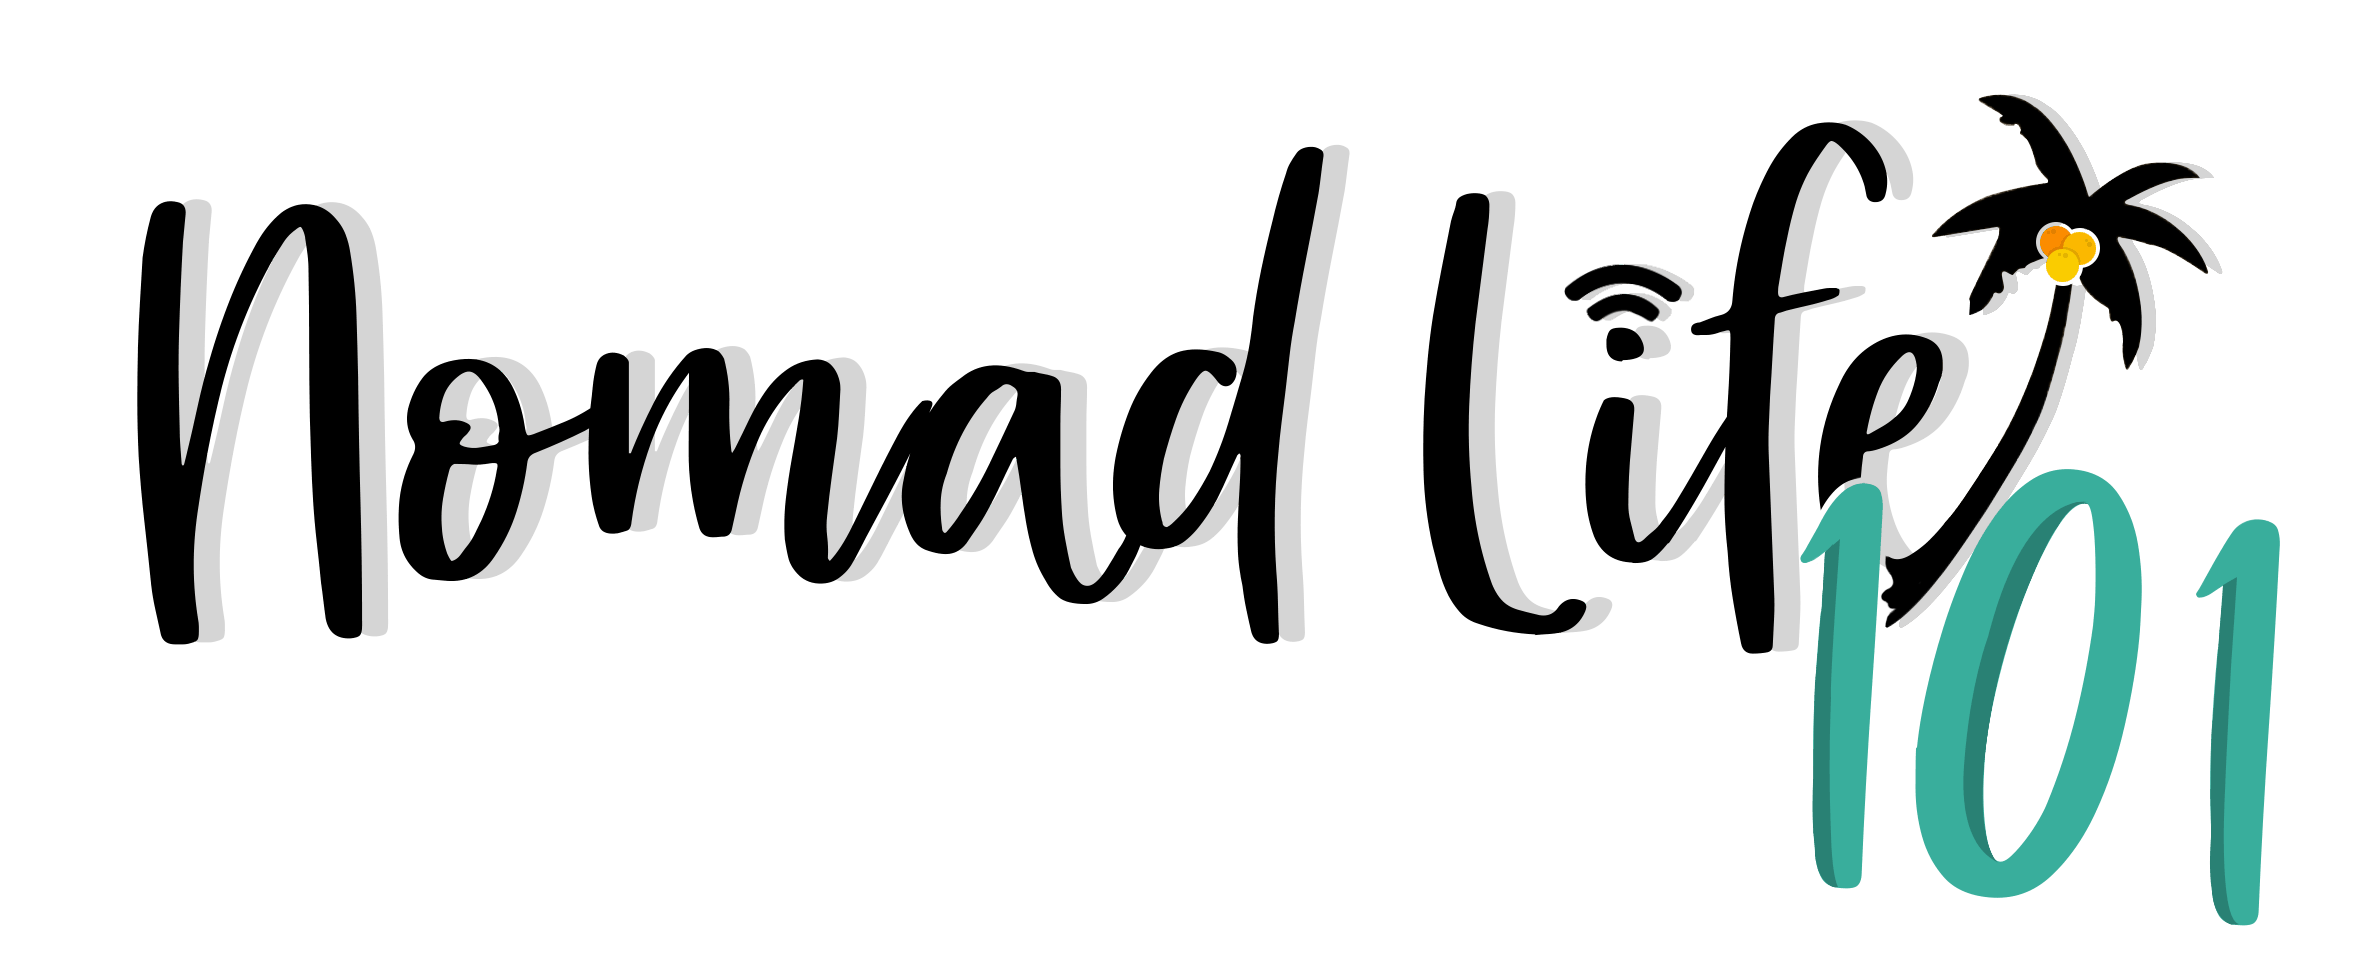 Номад лайф. Nomad Life. Digital Nomad лого. Стикер Digital Nomad. Digital Nomad Life.